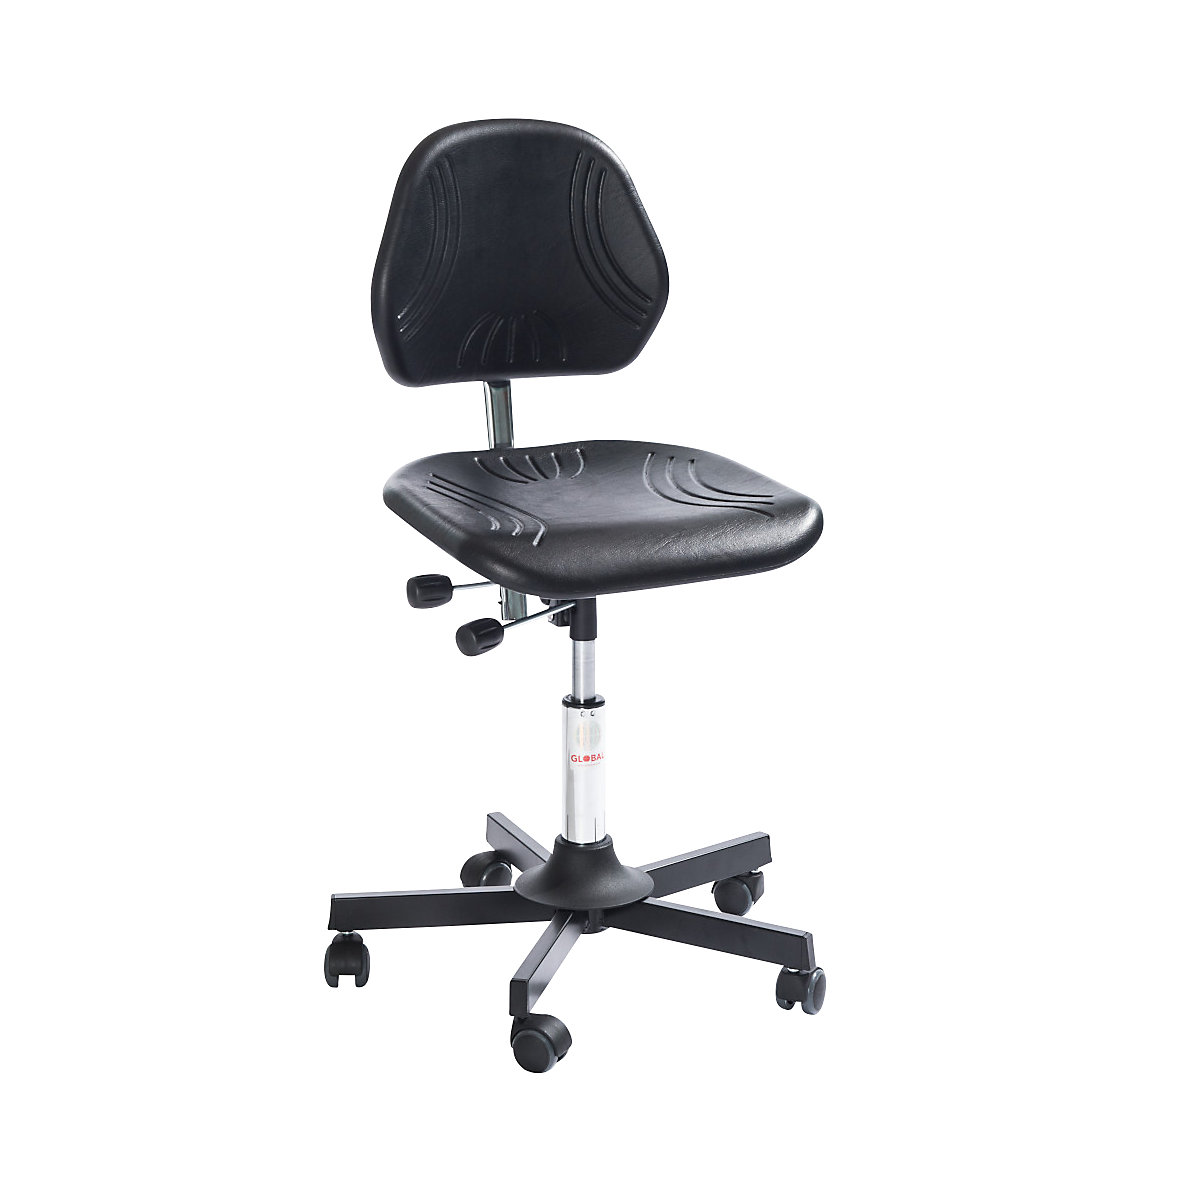 COMFORT industrial swivel chair